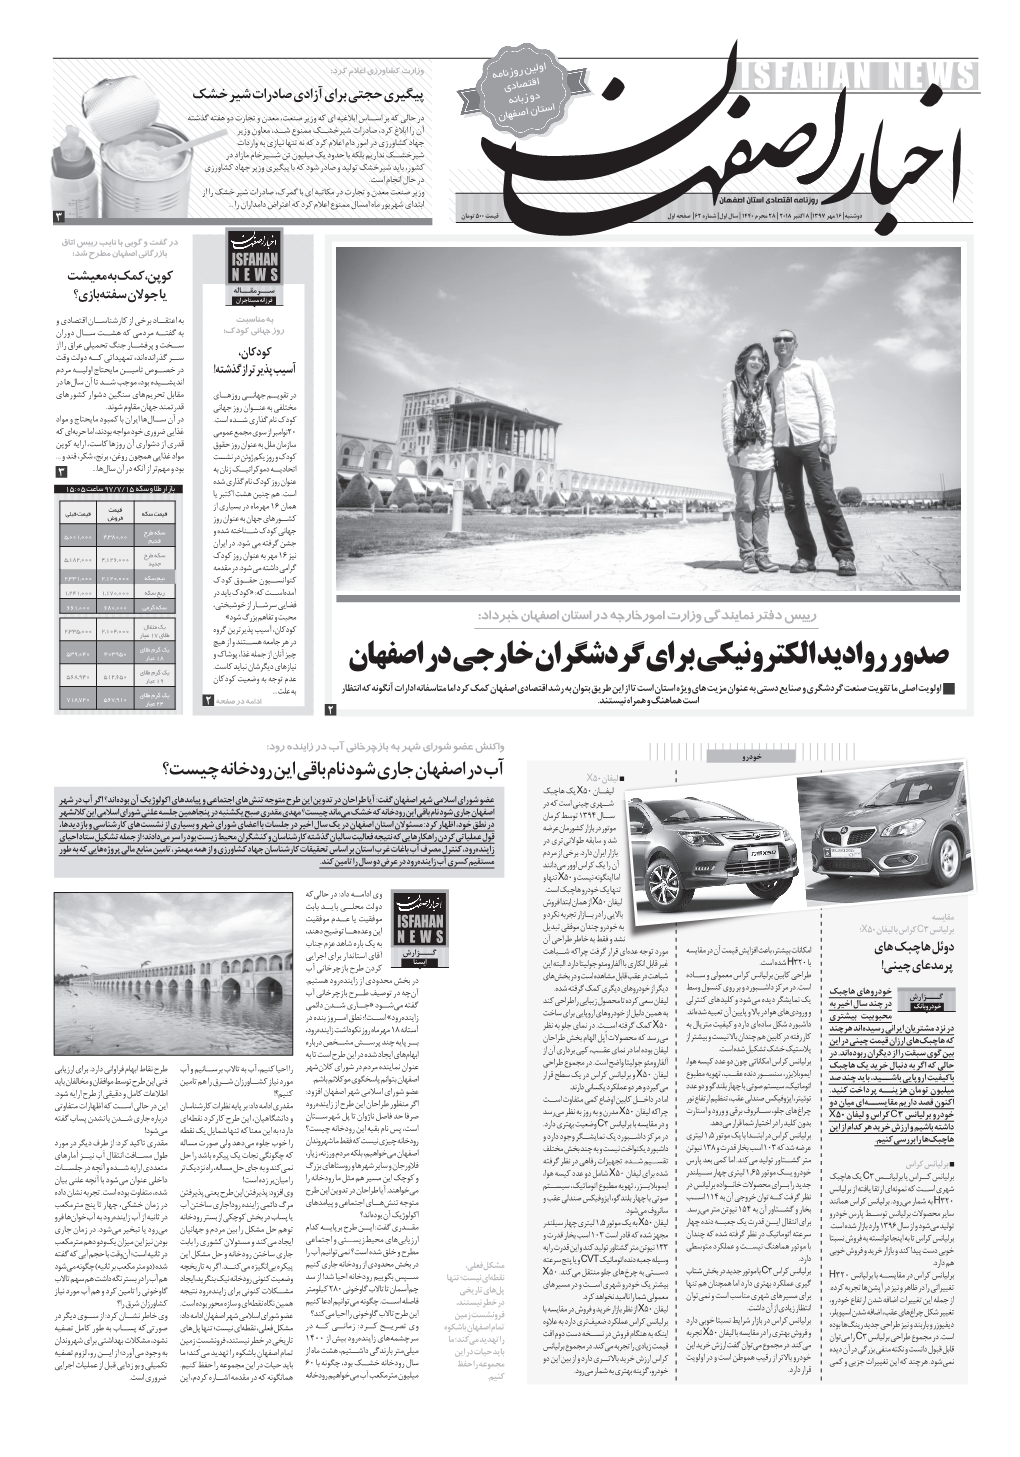 Isfahan News